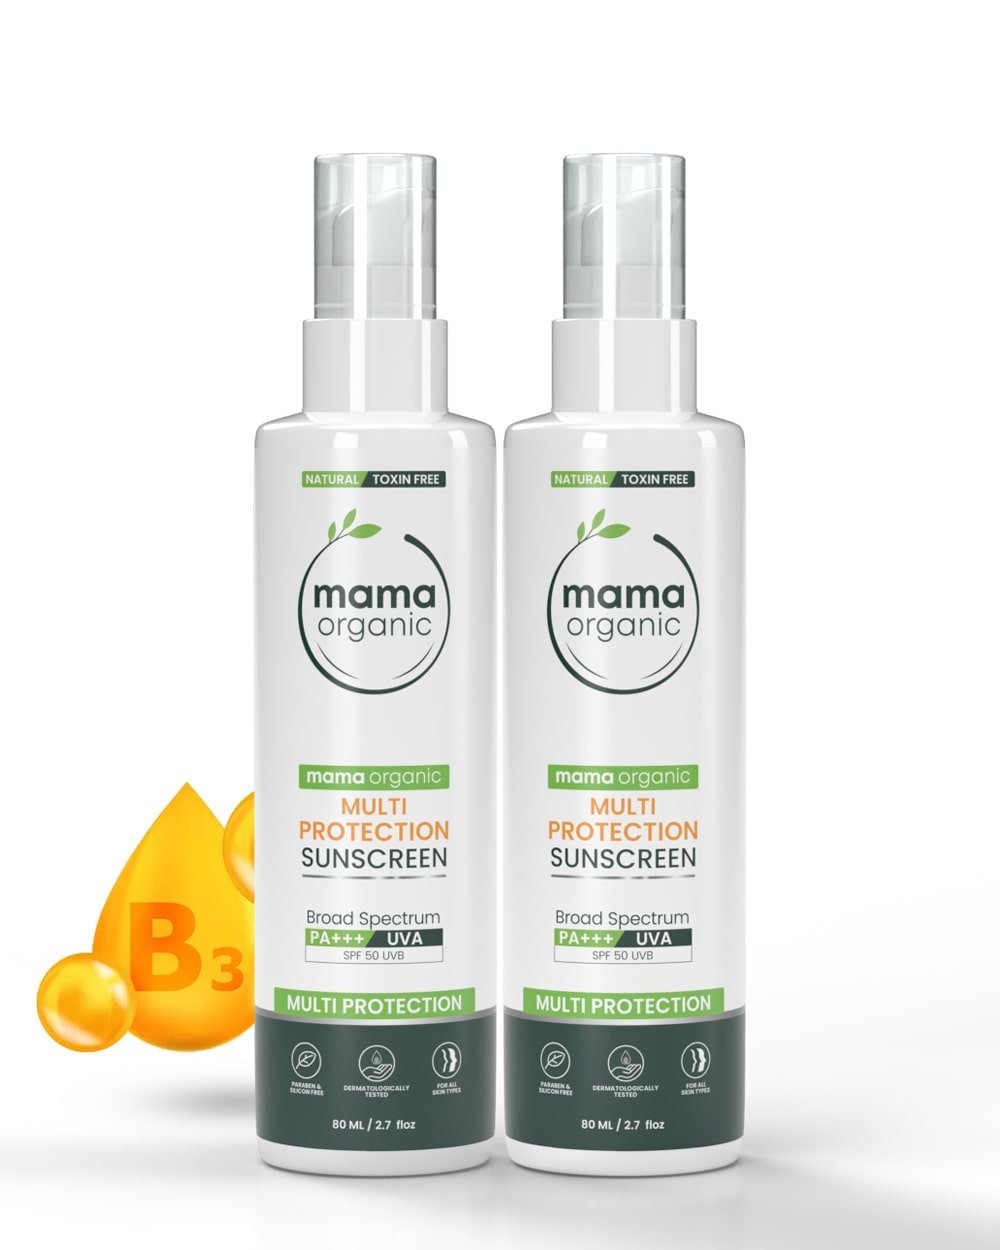 Multi Protection Sunscreen 80ml Combo - Natural & Toxin-Free - MamaOrganic